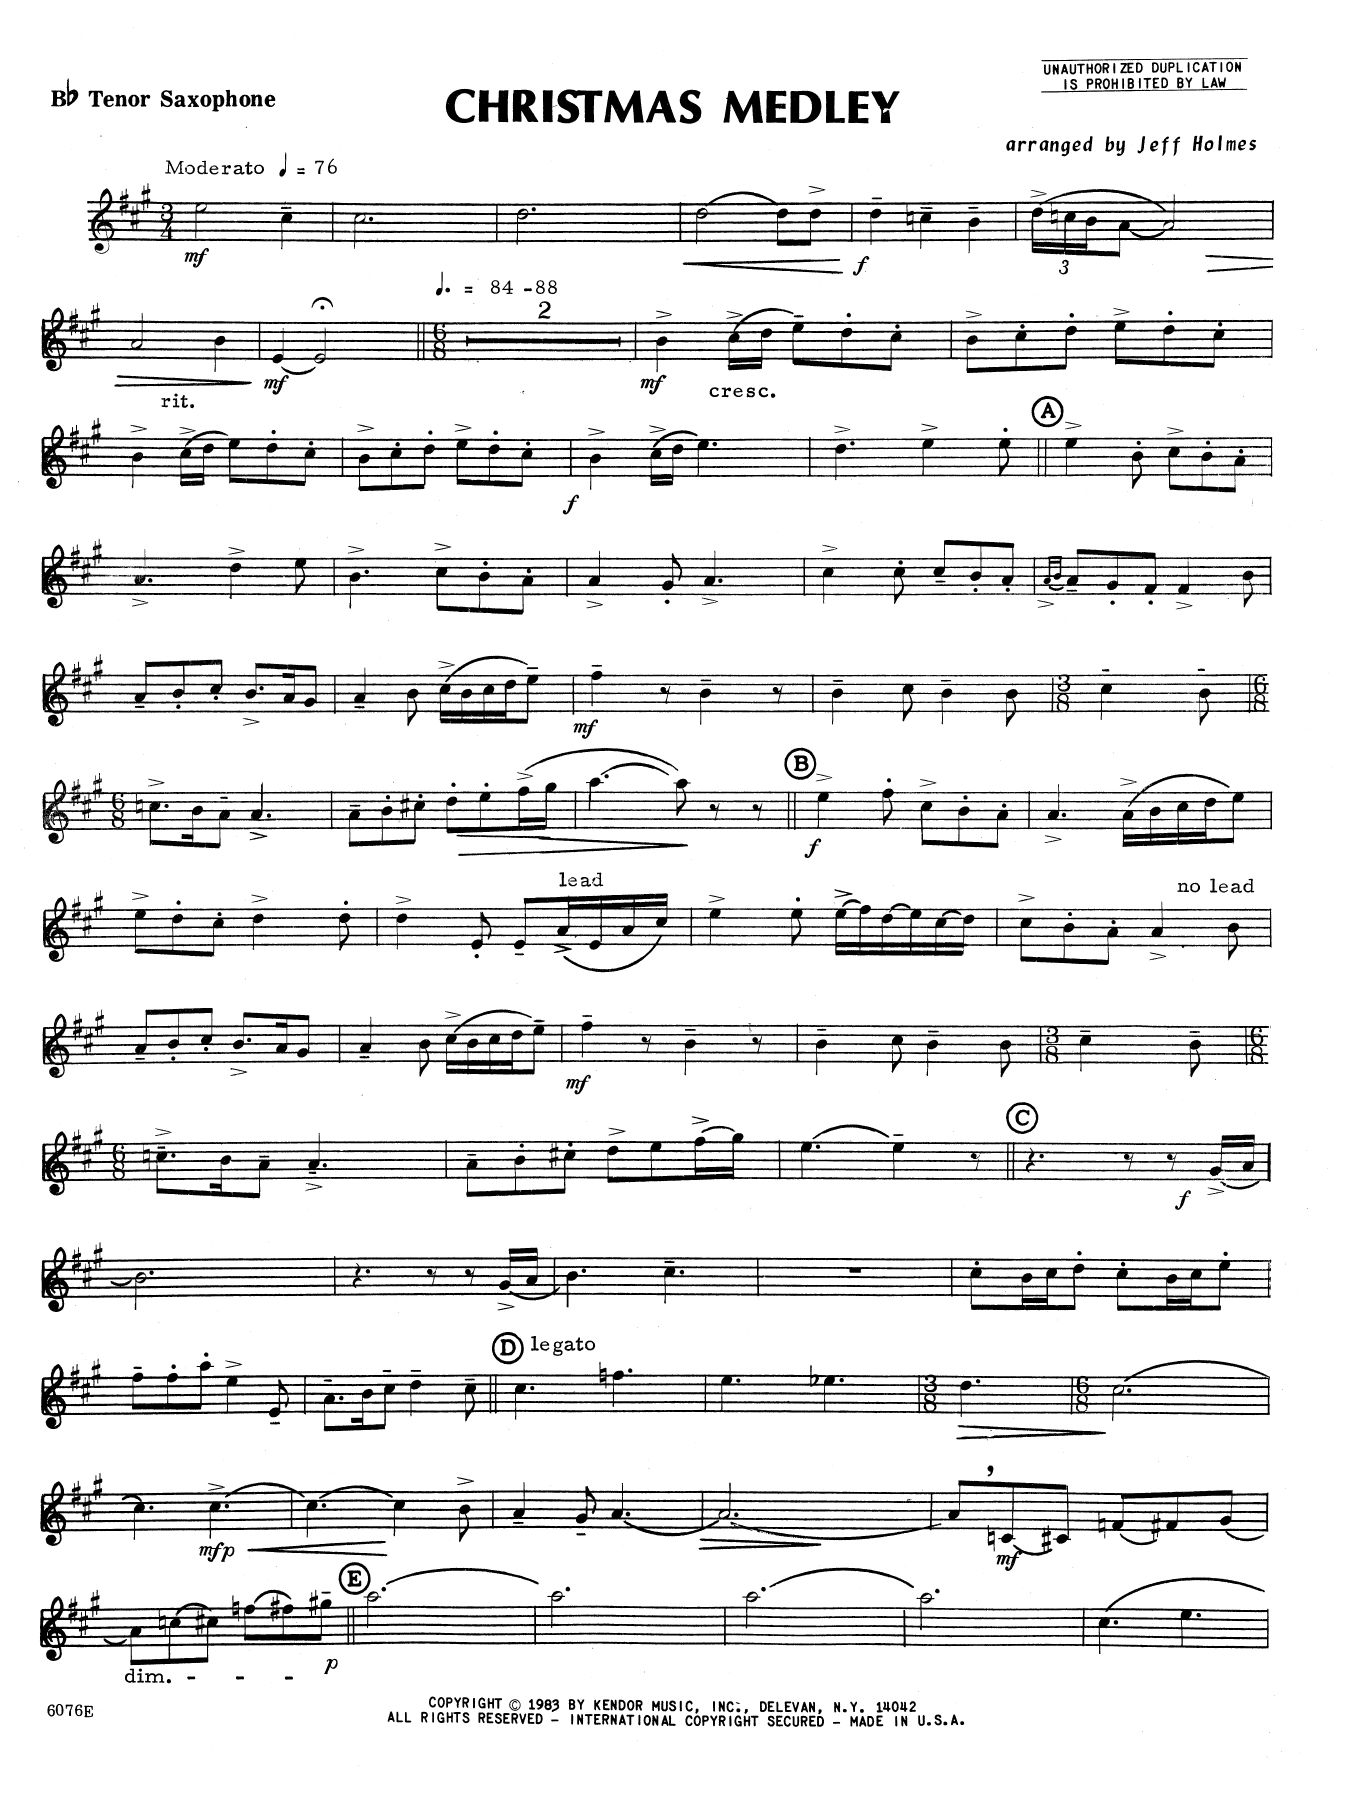 Download Holmes Christmas Medley - Bb Tenor Saxophone Sheet Music